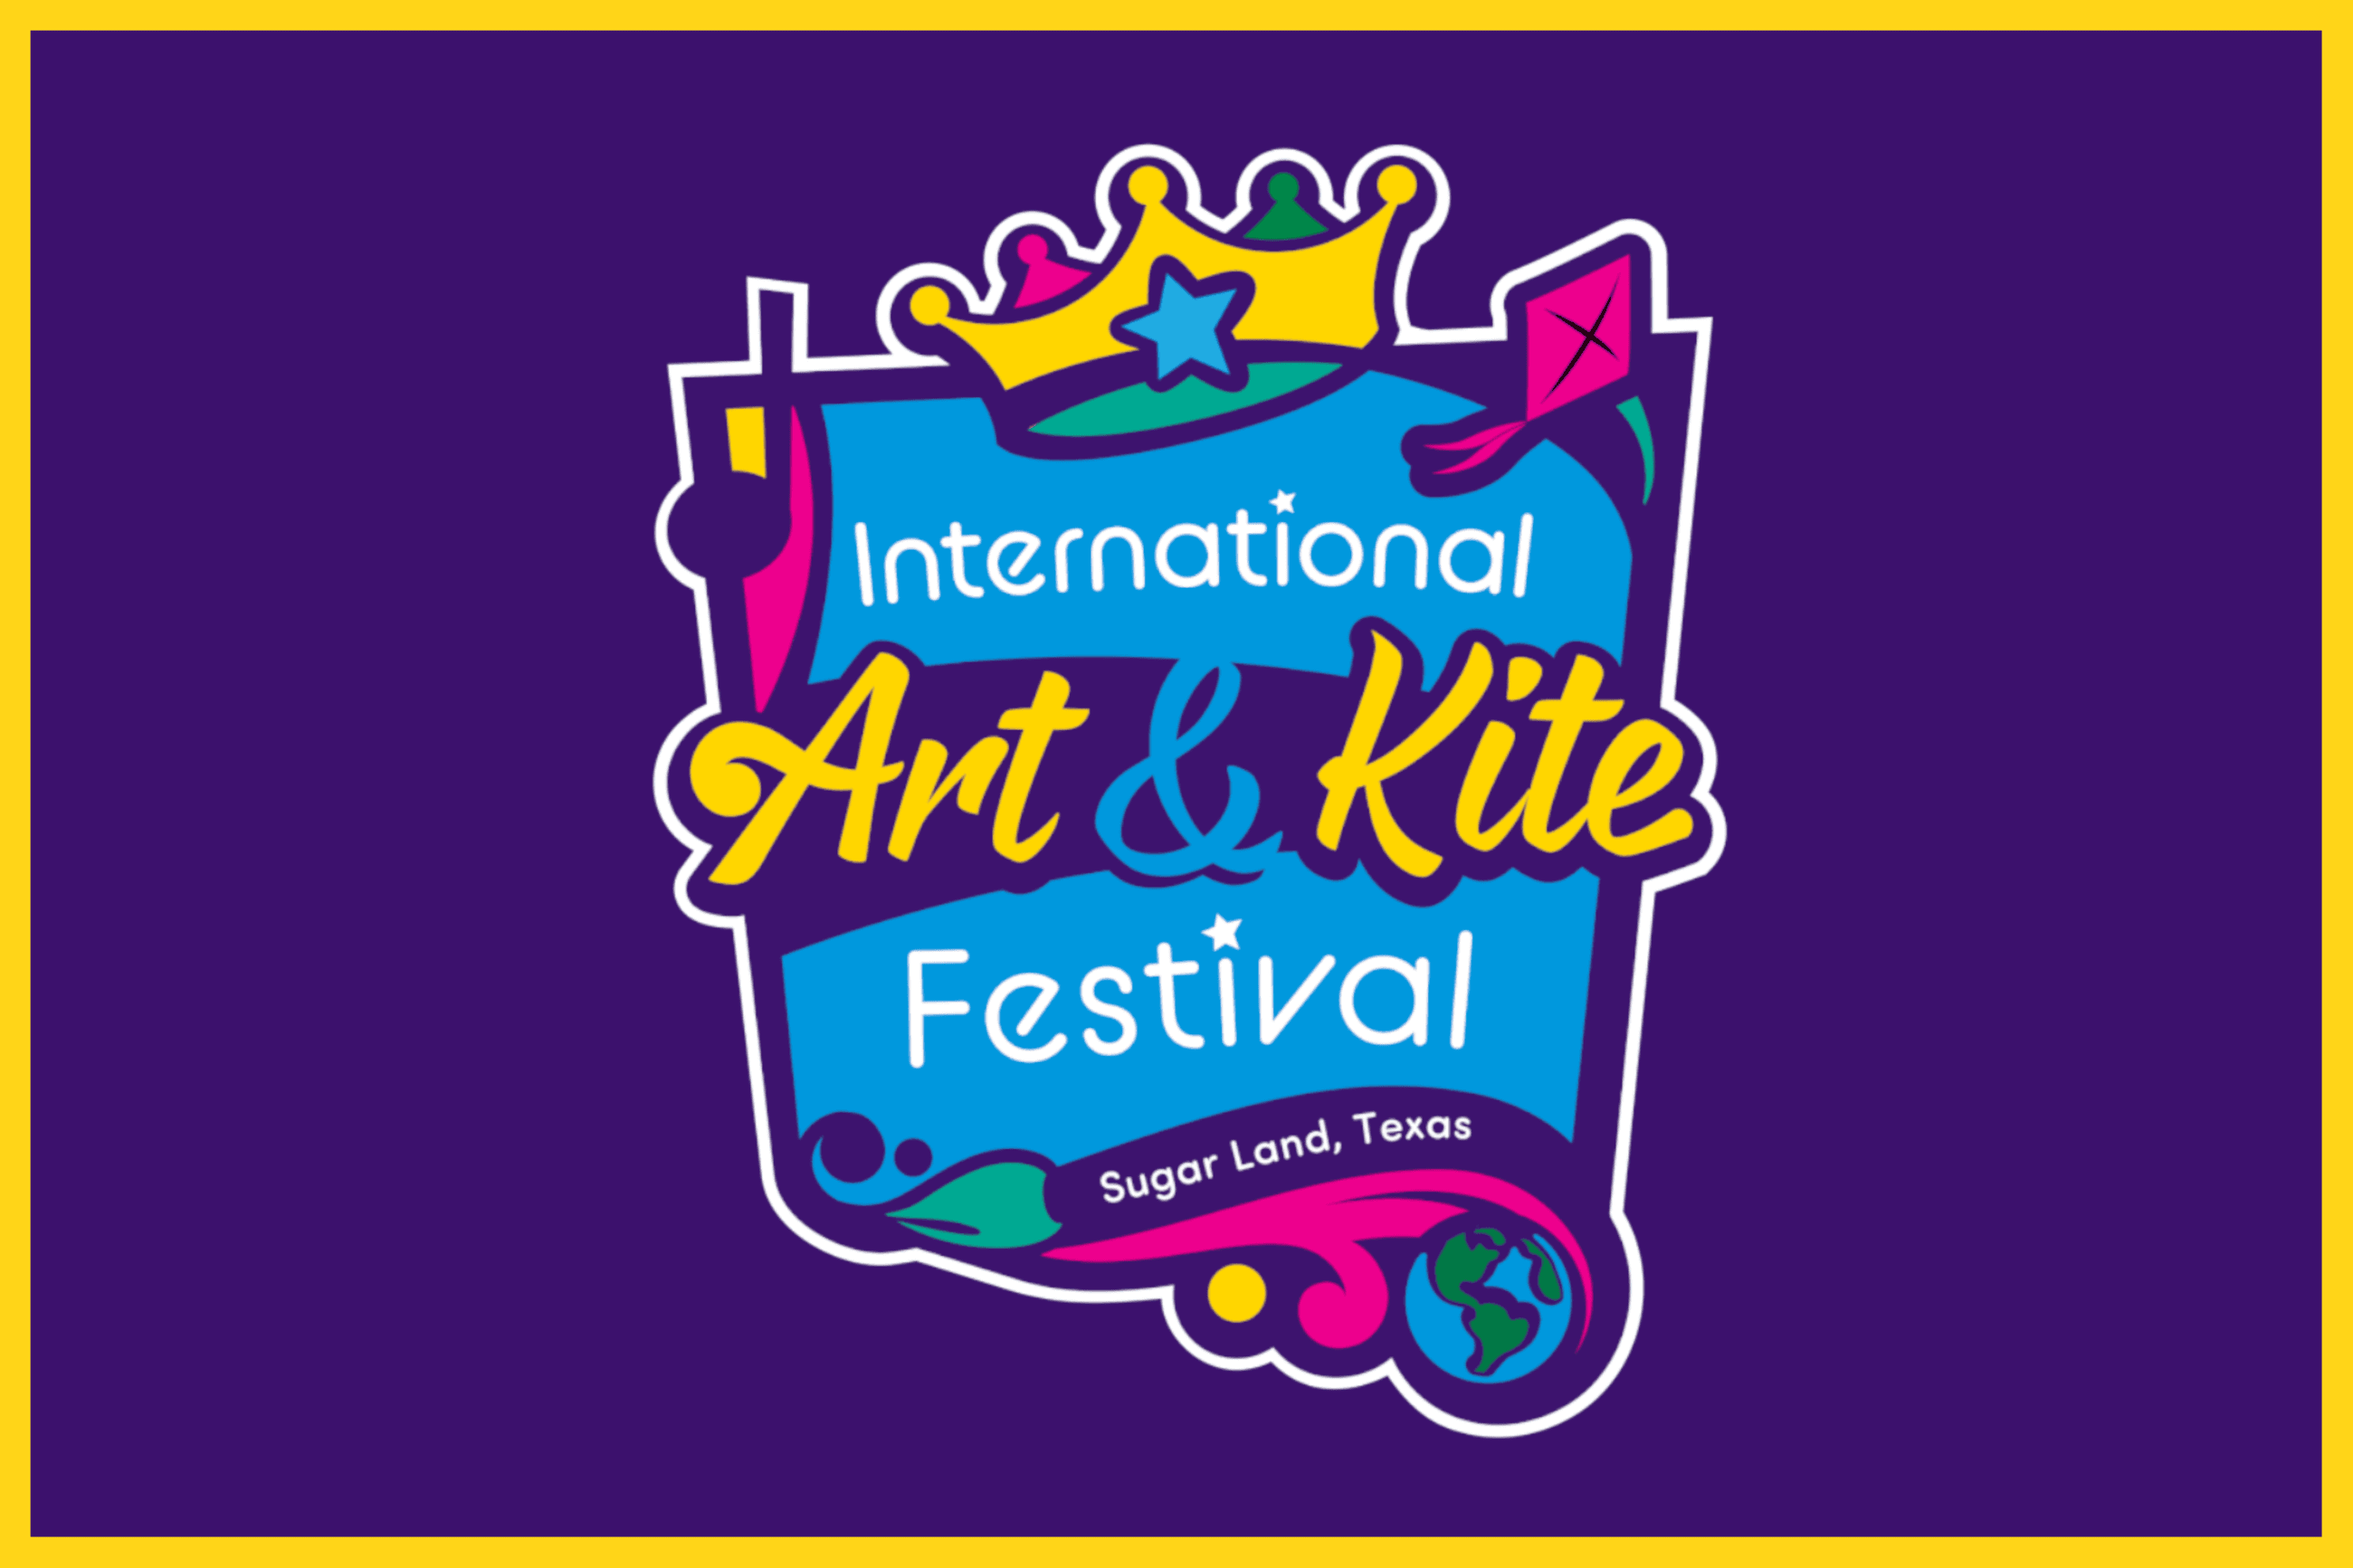 CITY OF SUGAR LAND International Art & Kite Festival